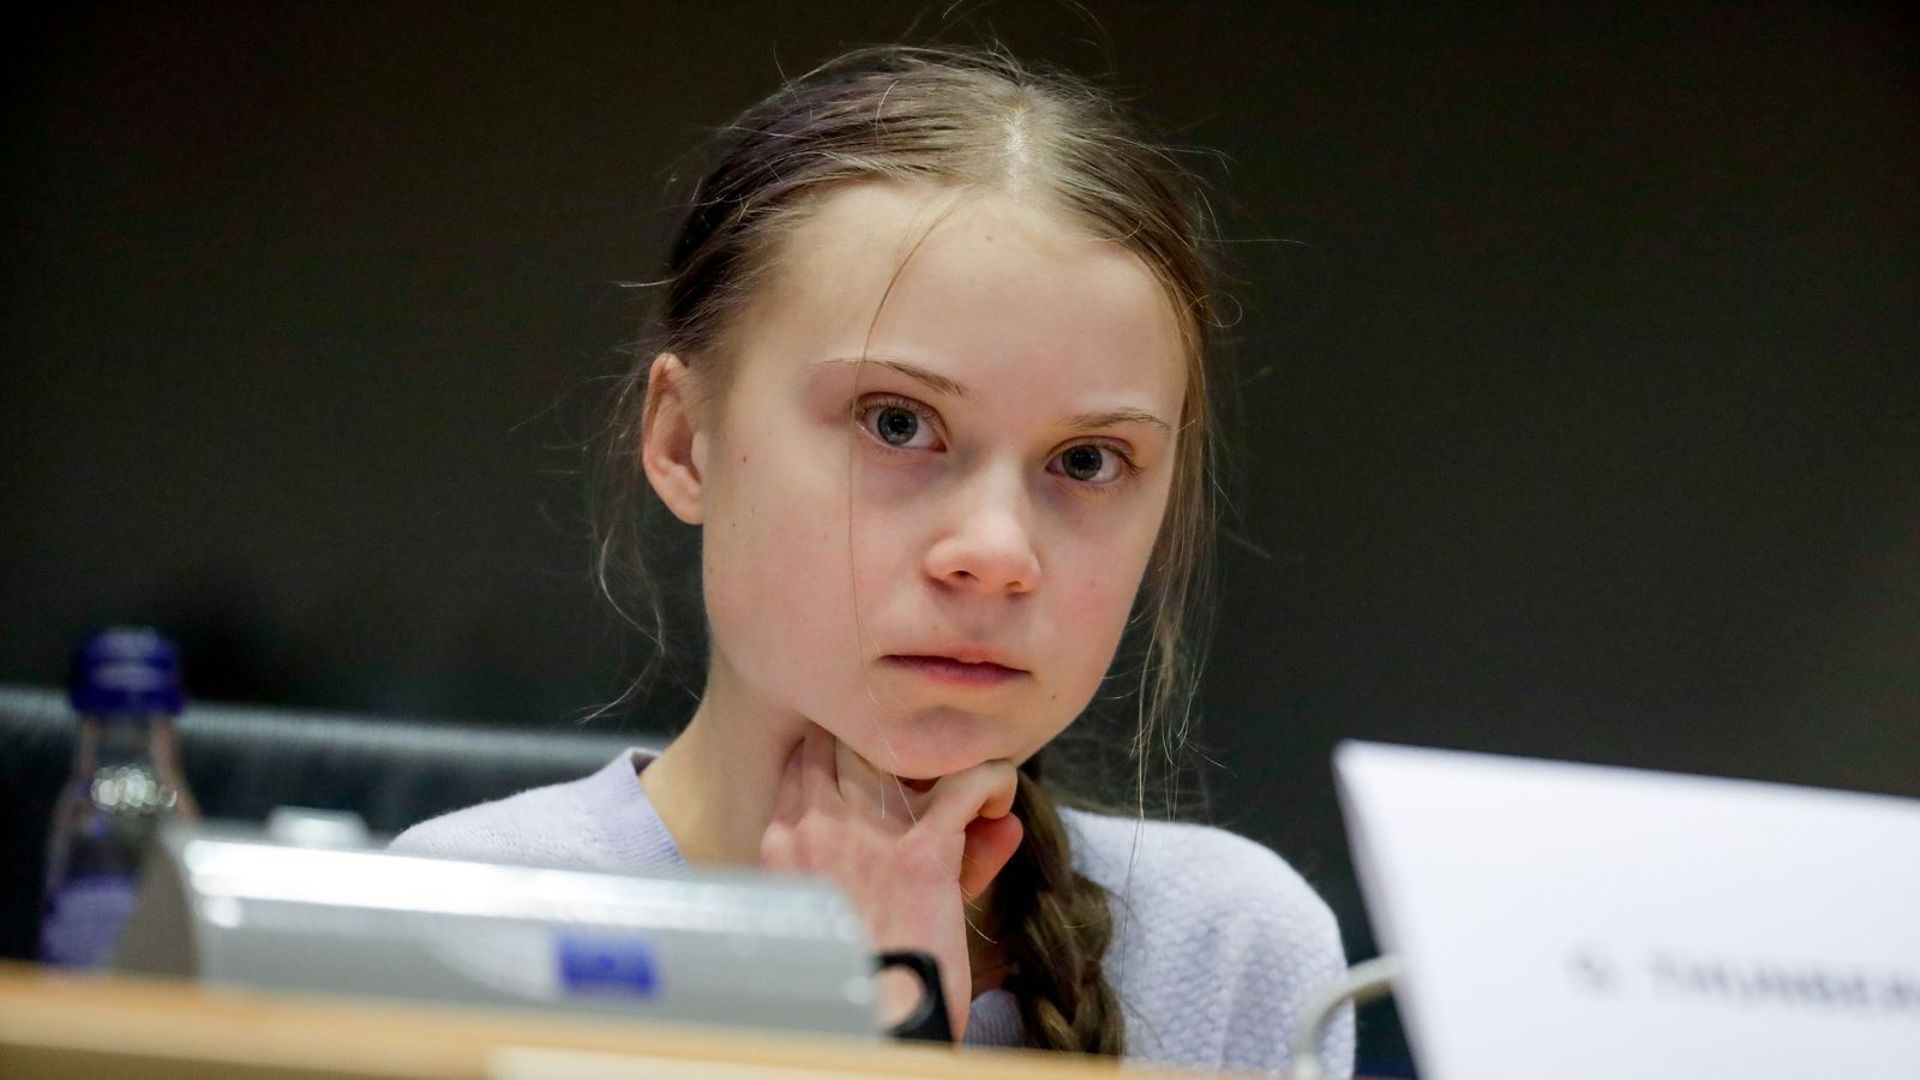 Mostra 2020 : "Greta", le documentaire qui a suivi un an de la vie de Greta Thunberg